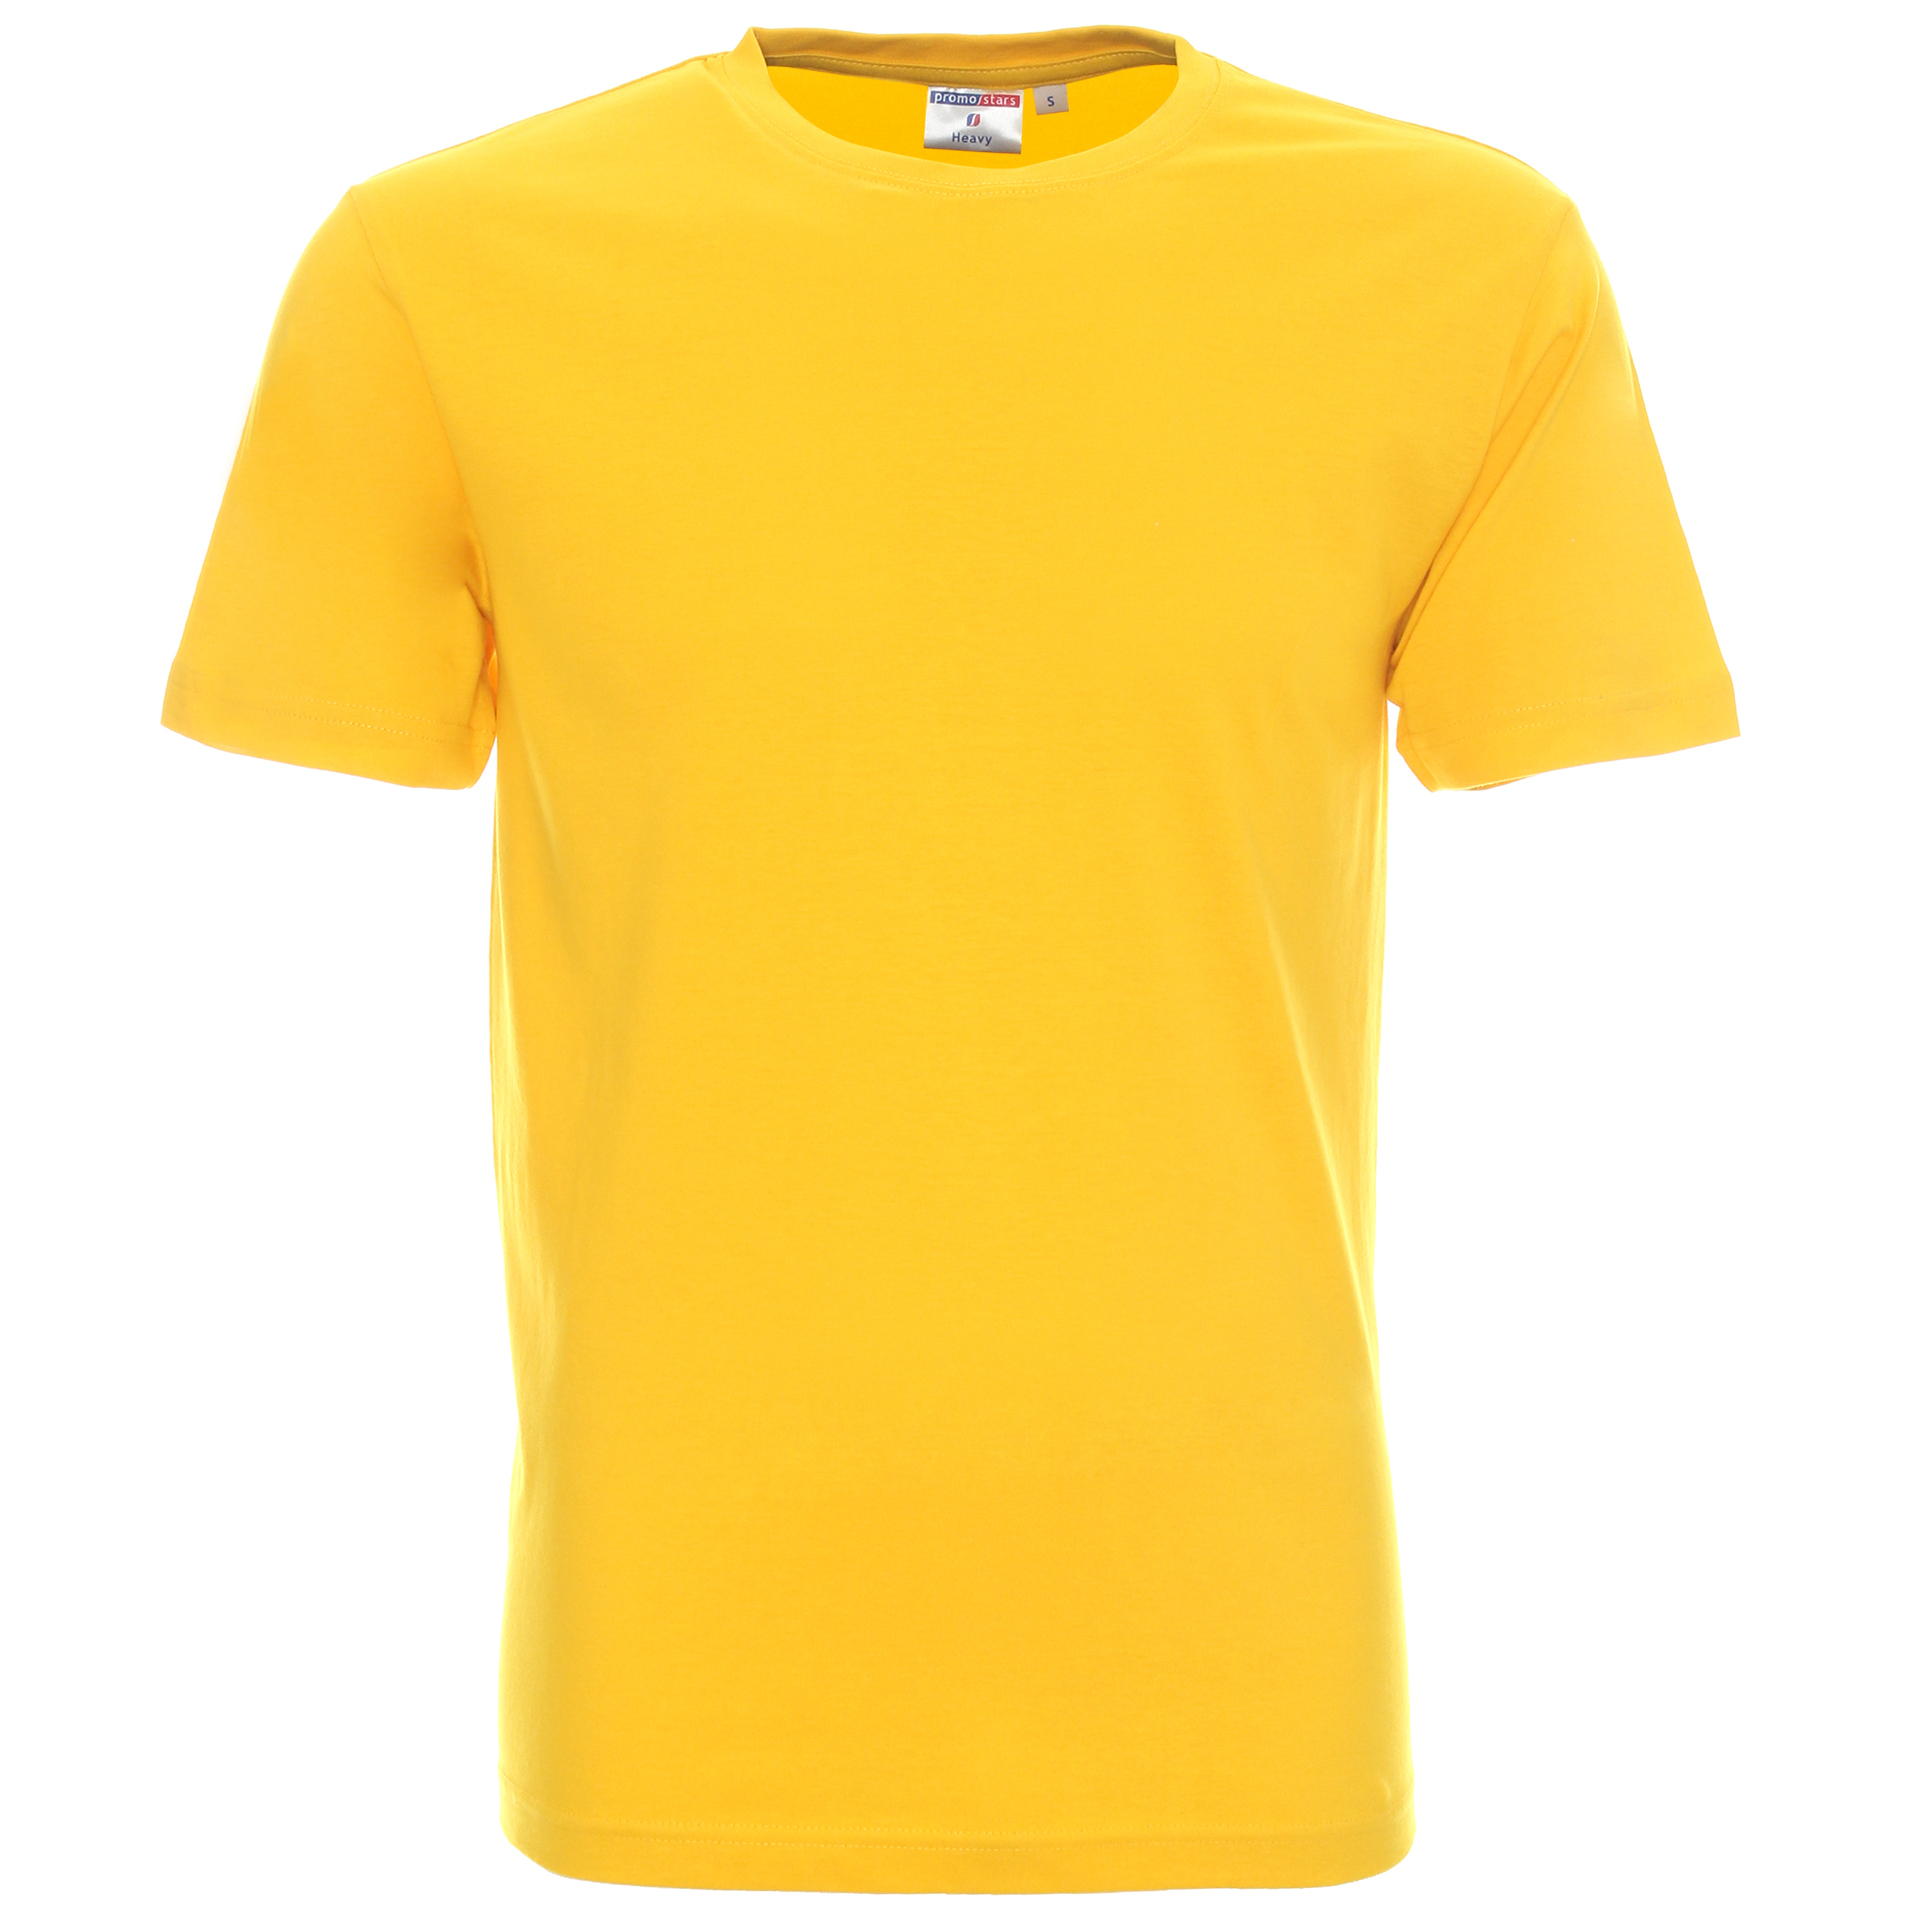 HEAVY 170 - t-shirt - advertising clothes Lpp-Printable